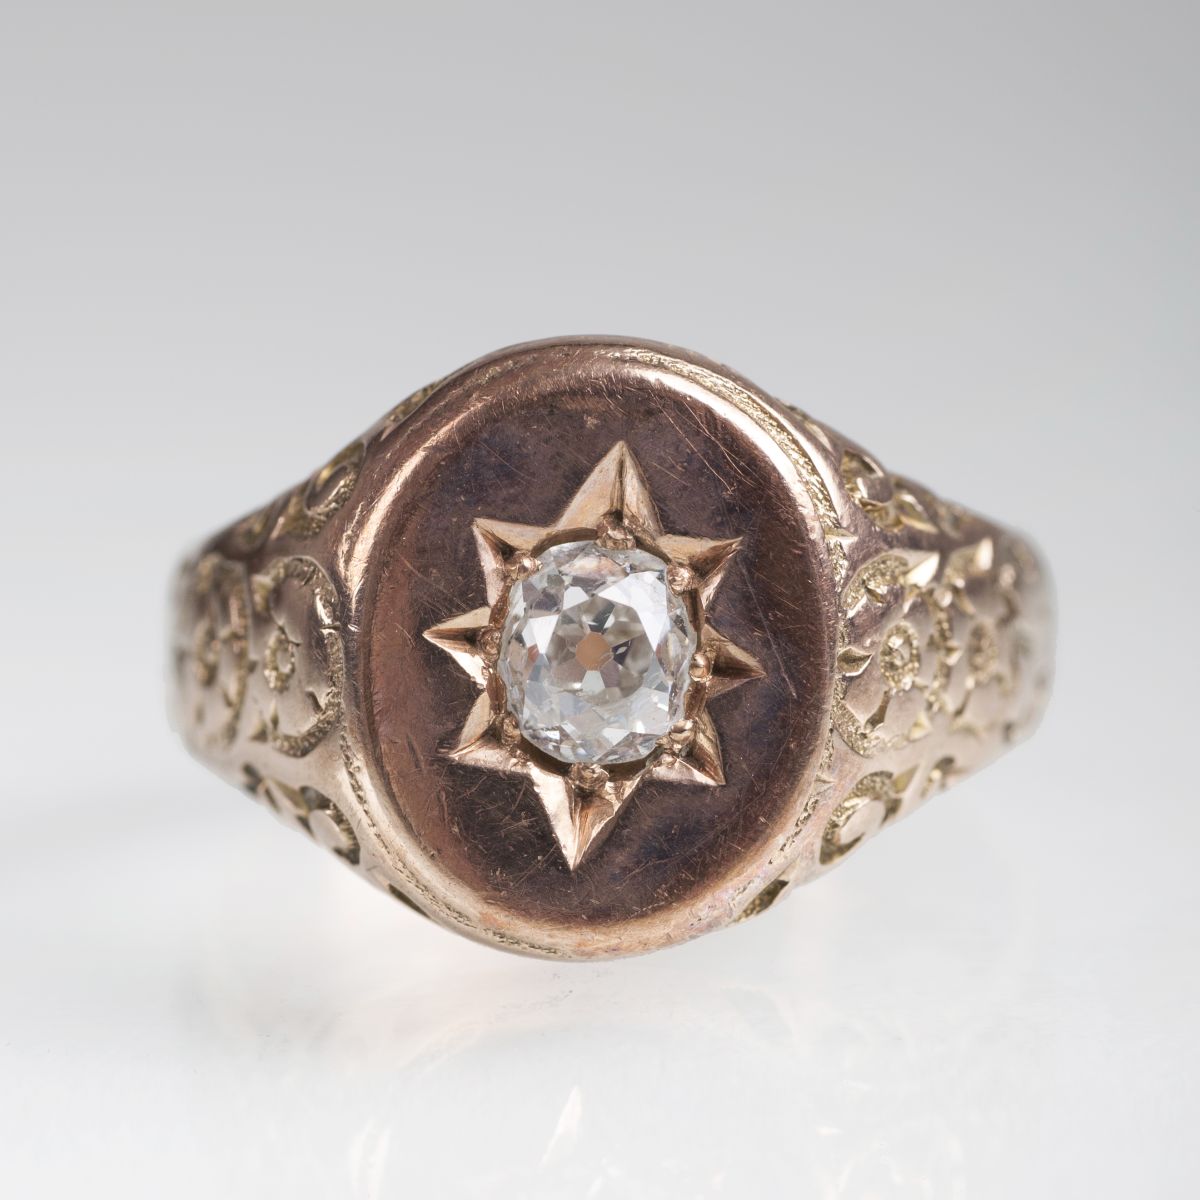 An antique old cut diamond ring